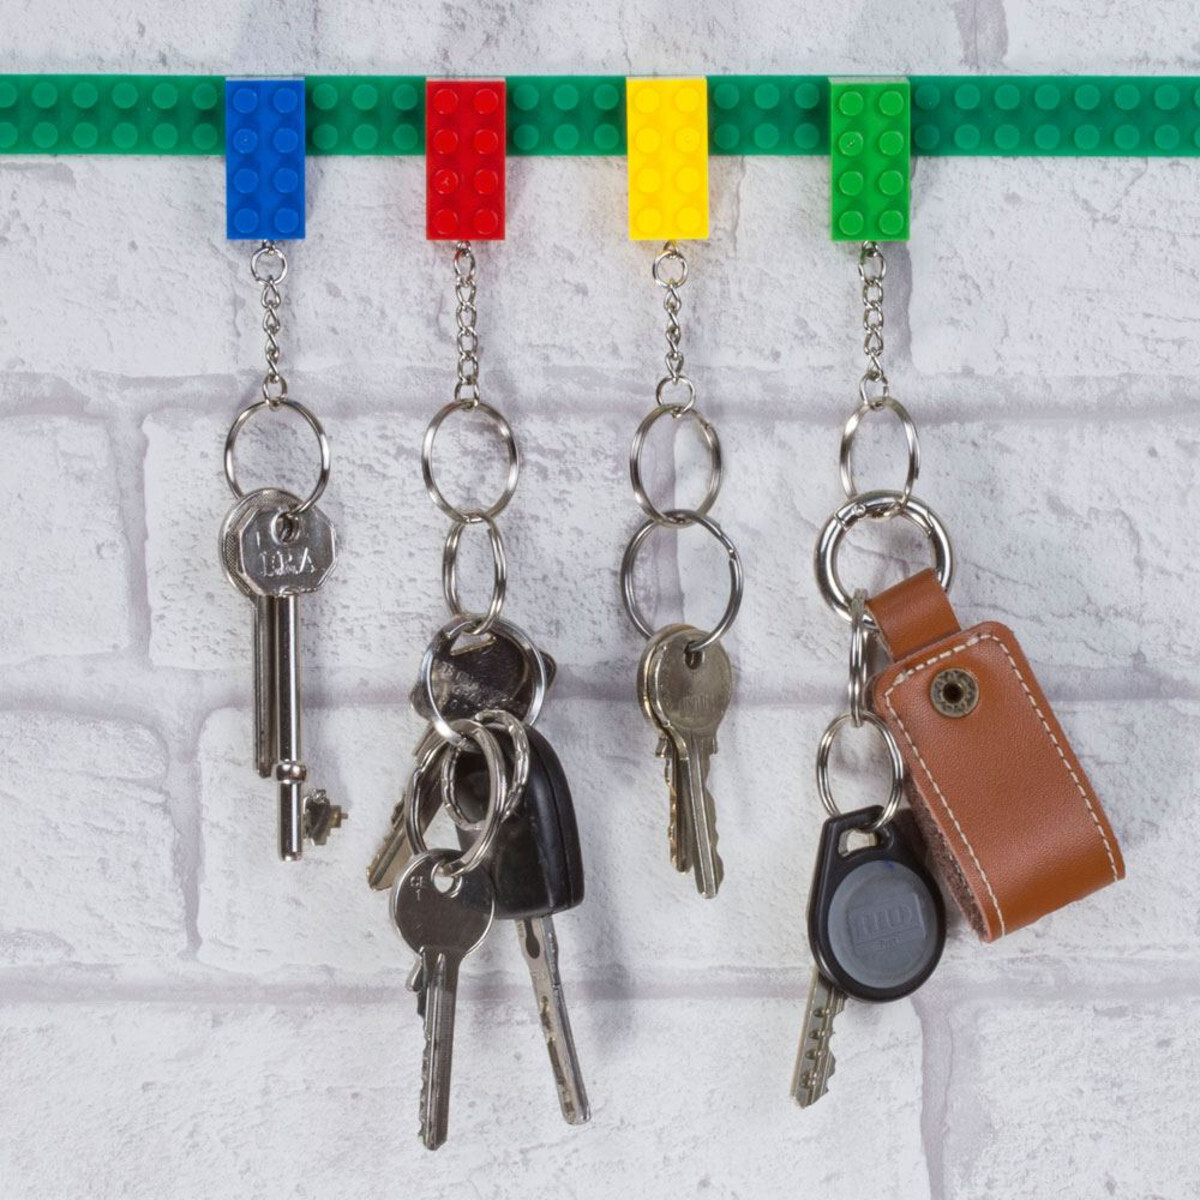 Key Brick key holder by thumbsUP!